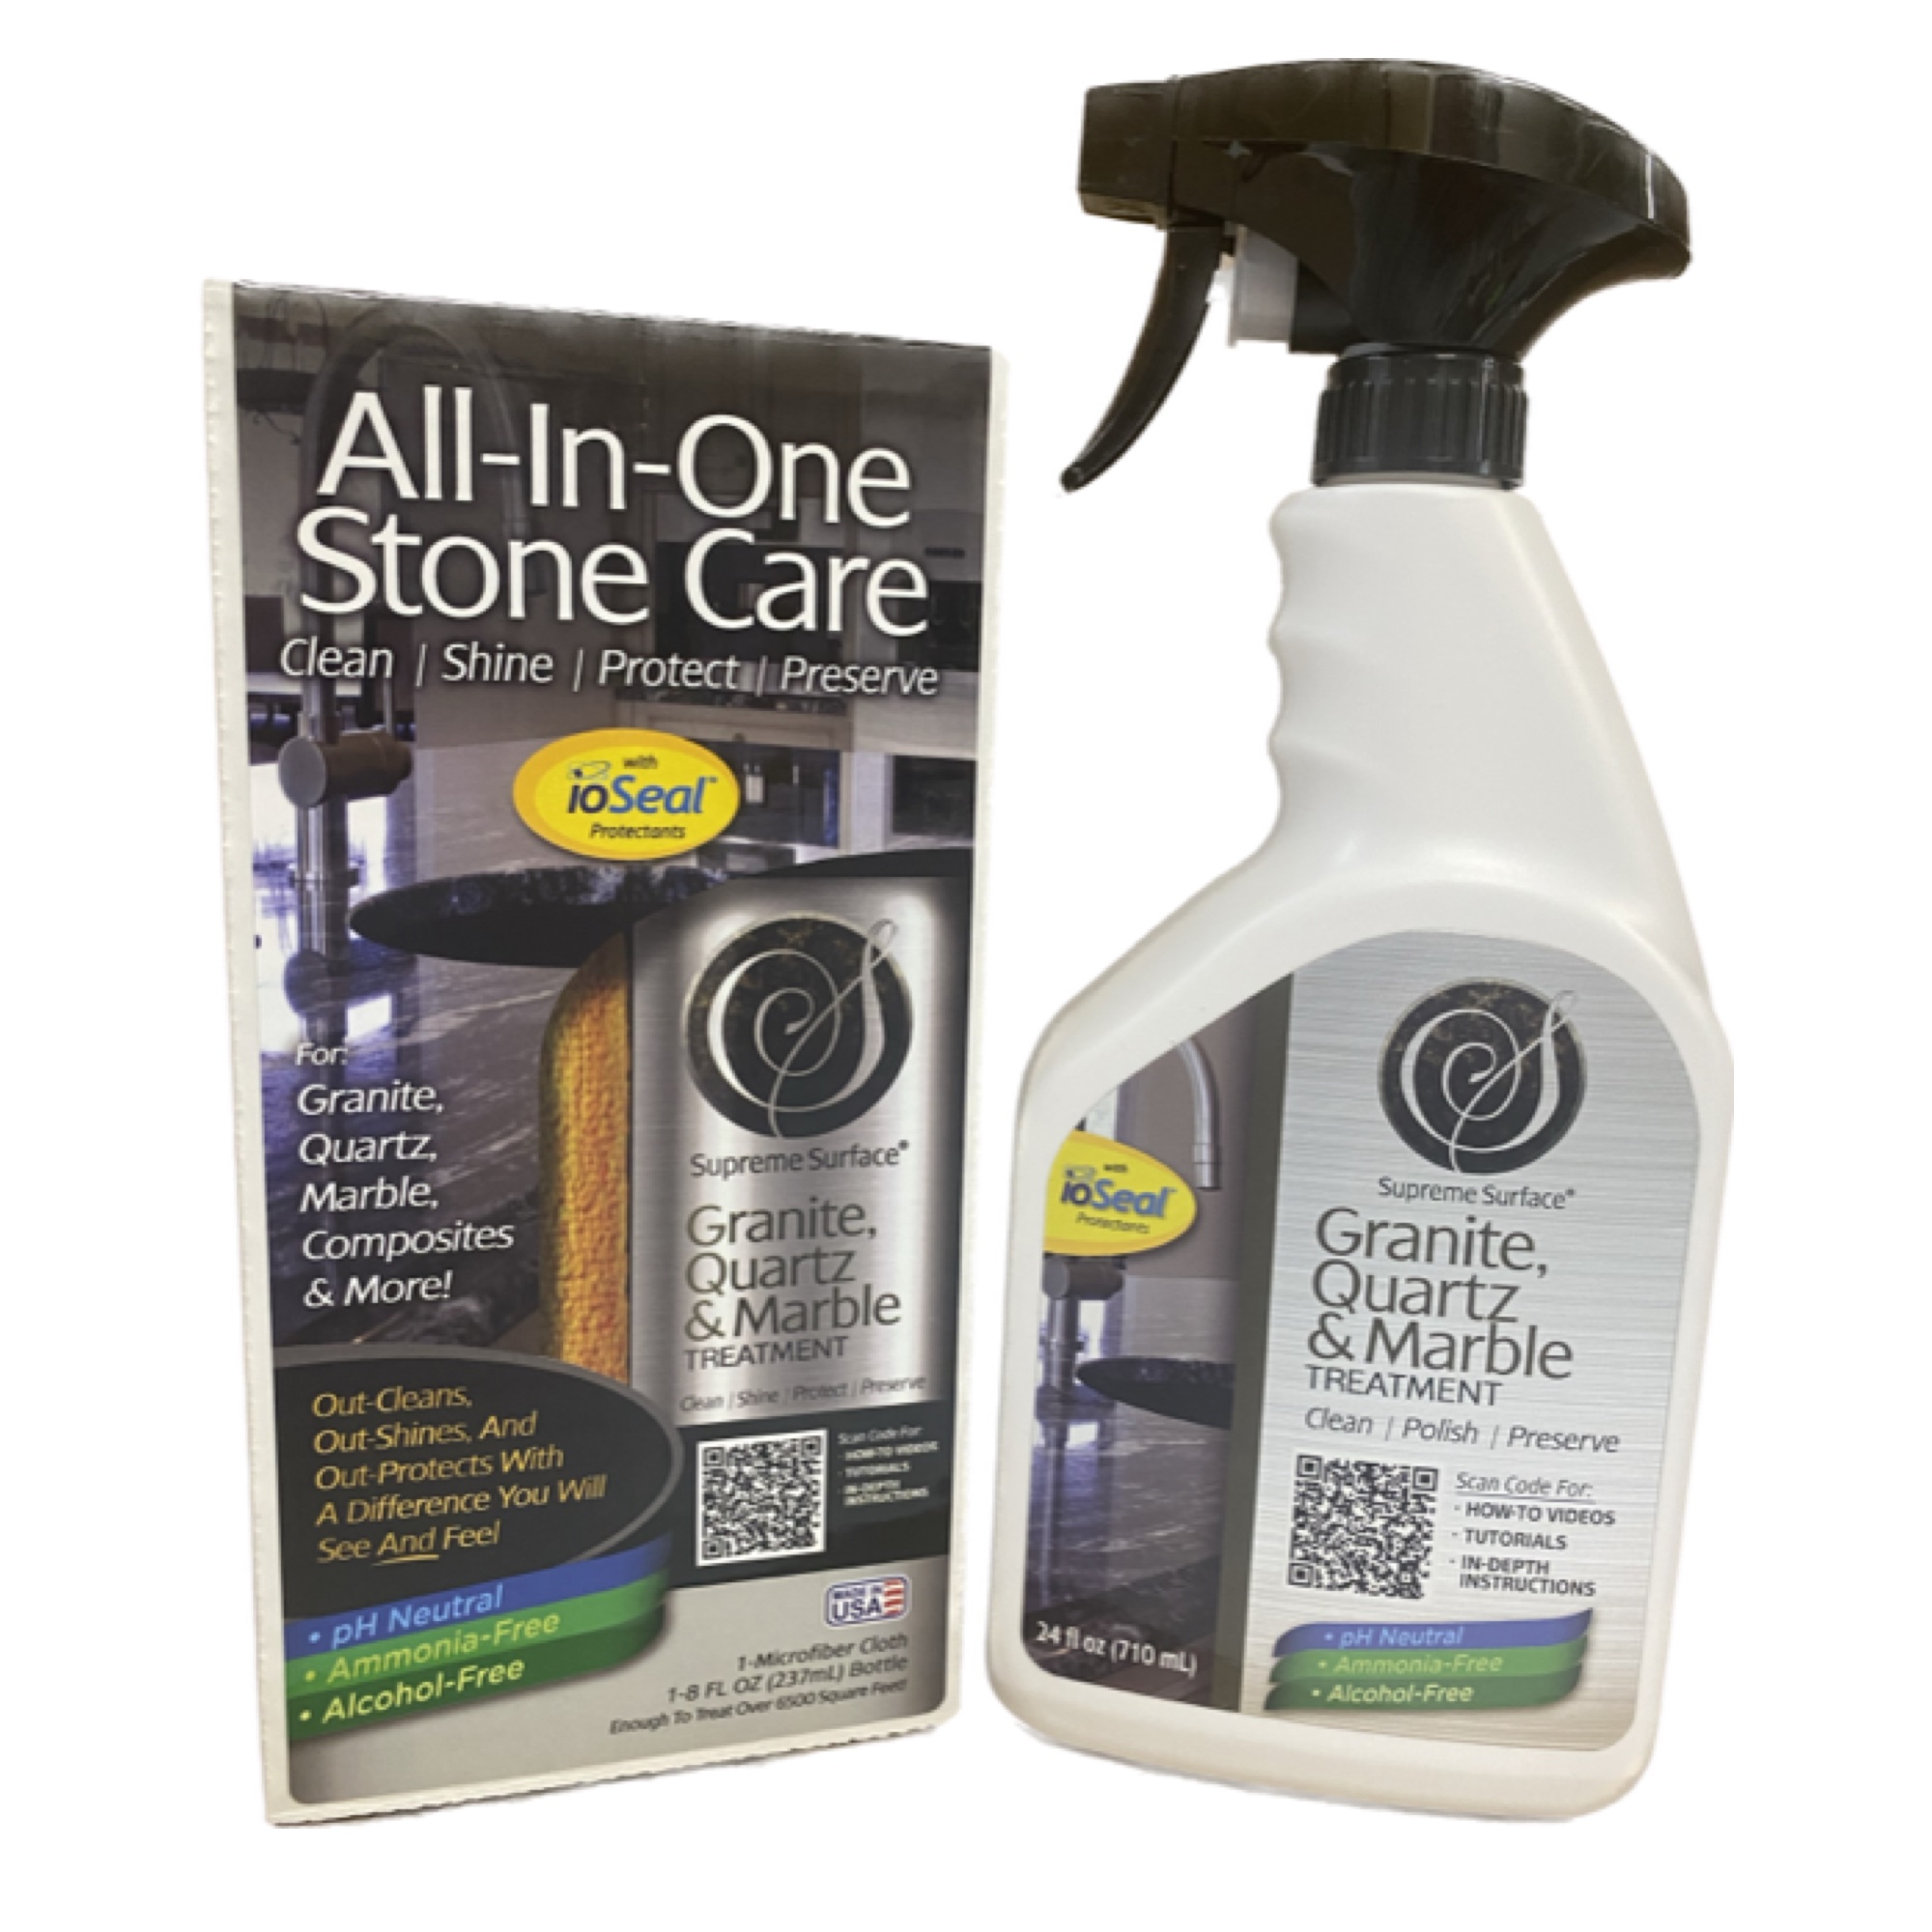 Supreme Surface Granite Quartz & Marble Treatment, 8oz and 24oz Spray bottles